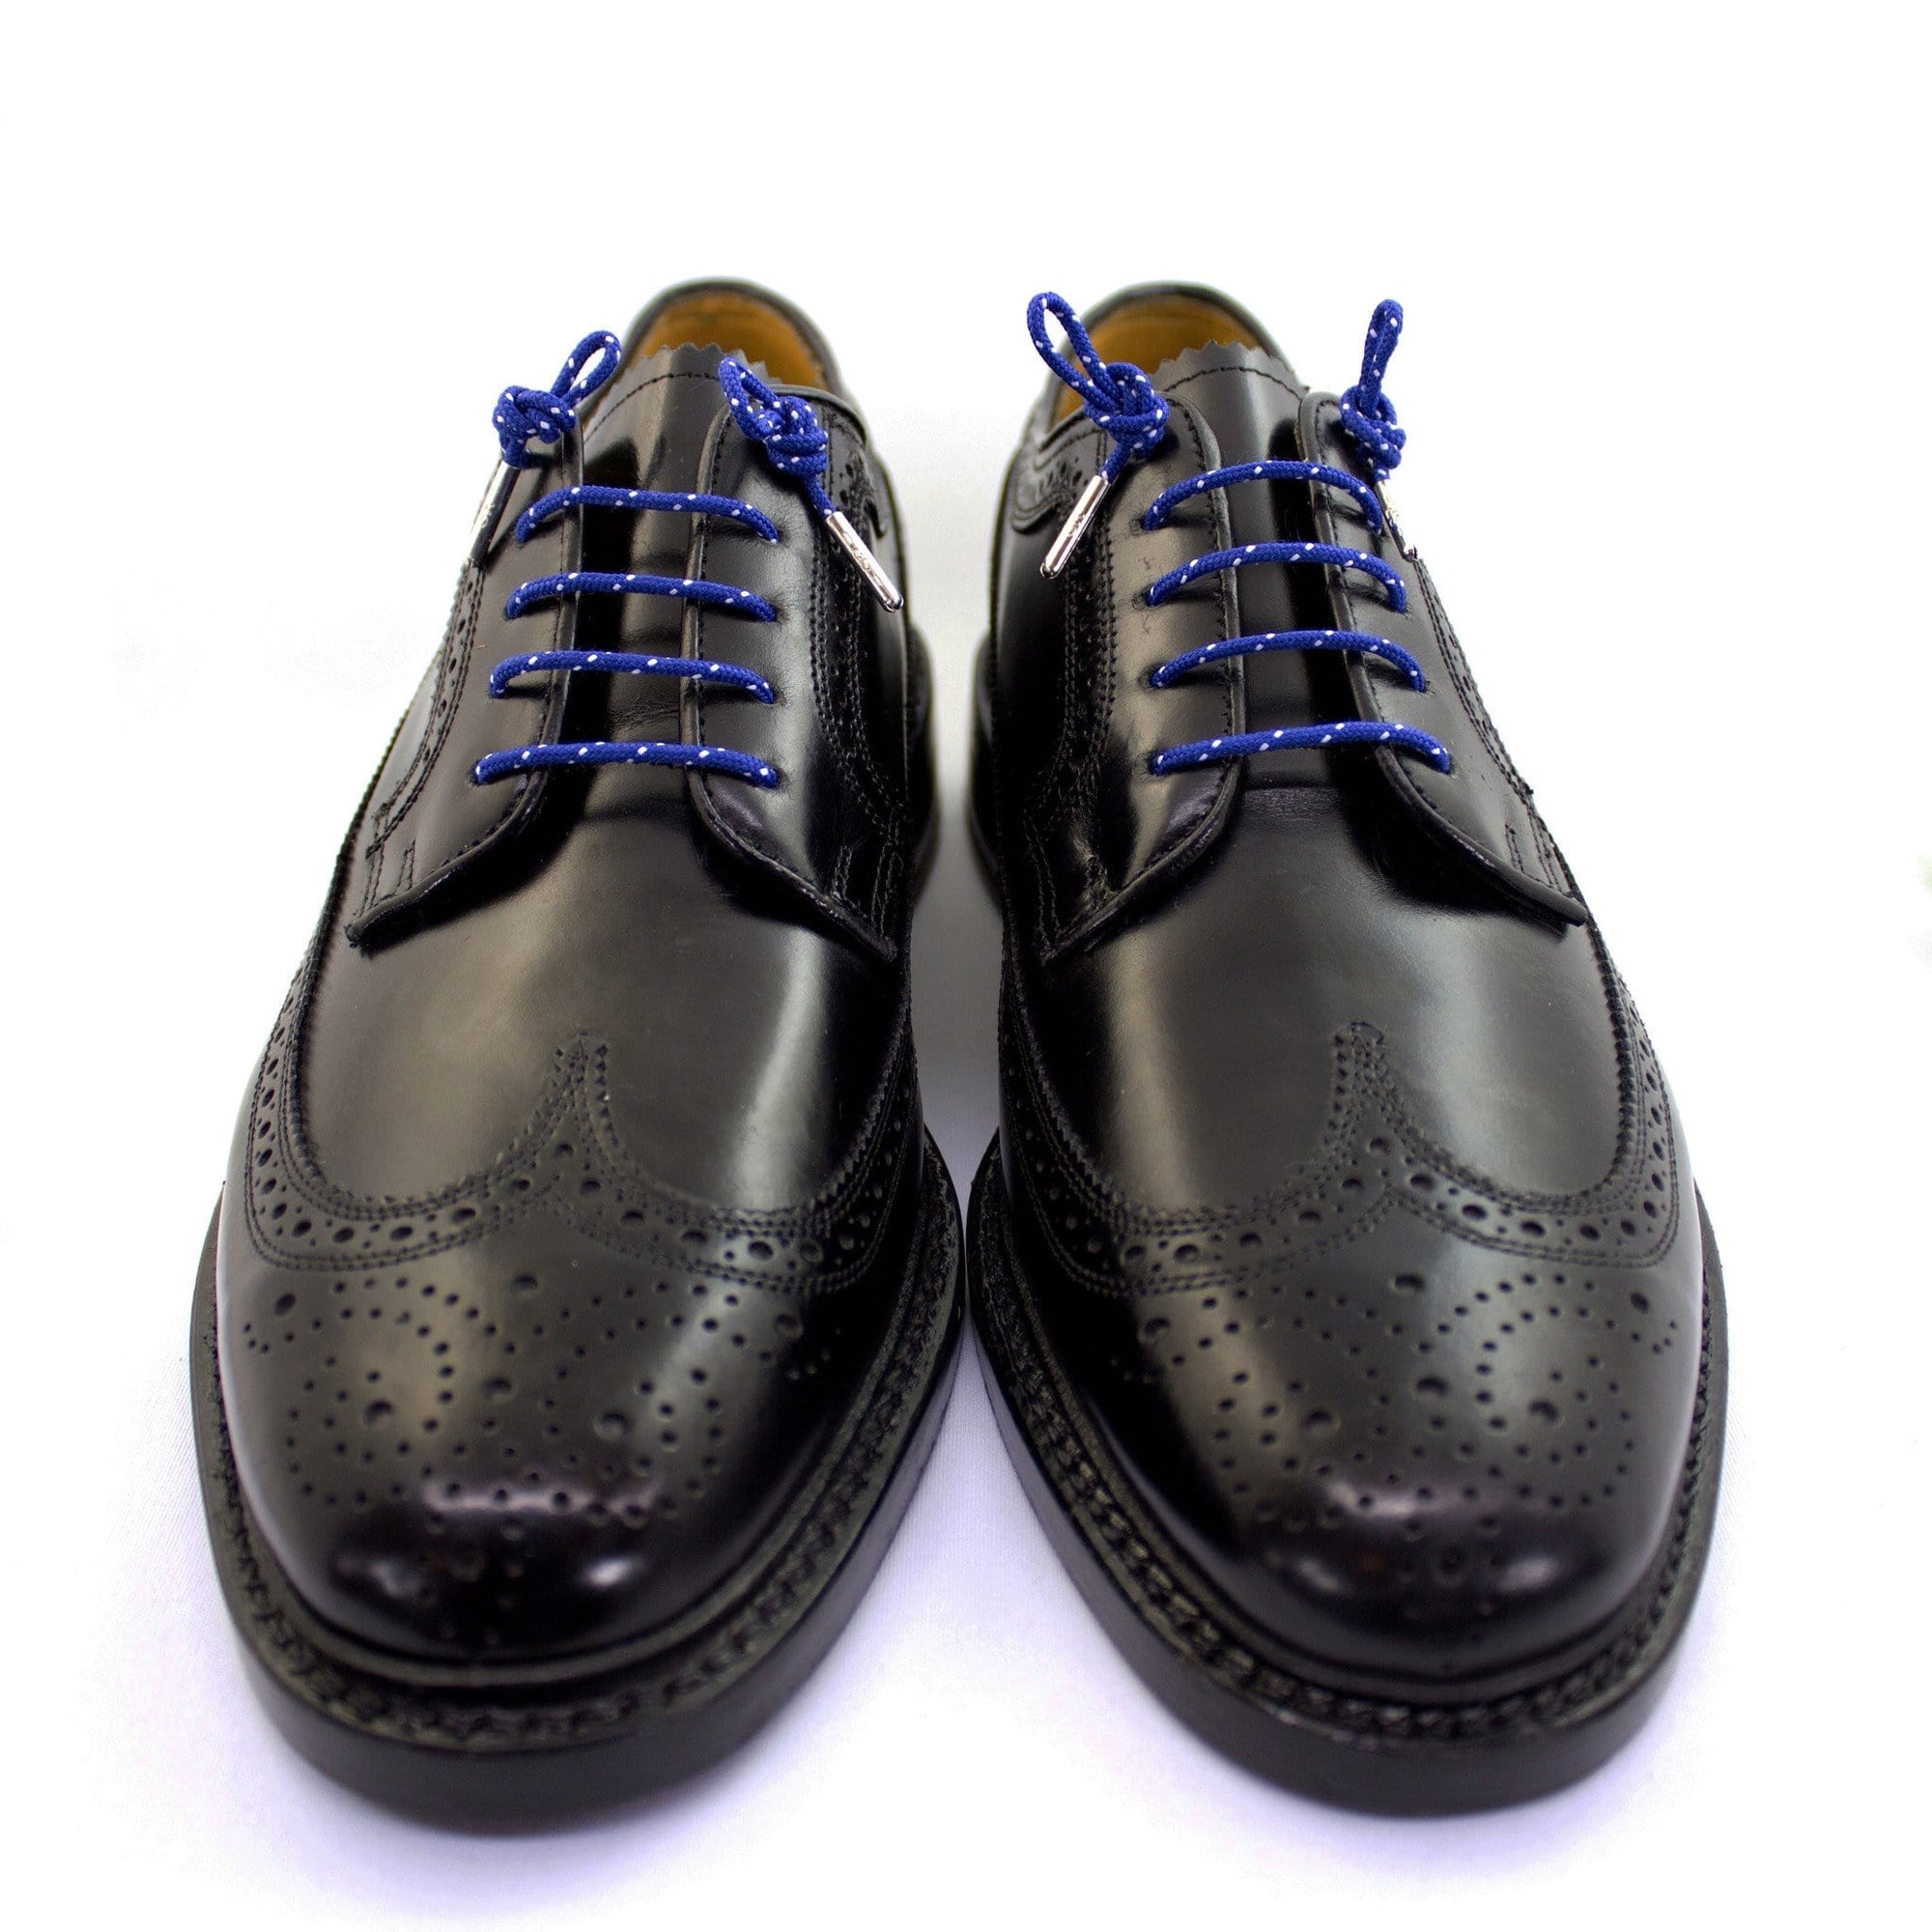 Royal blue and white dots laces for dress shoes, Length: 27"/69cm-Stolen Riches